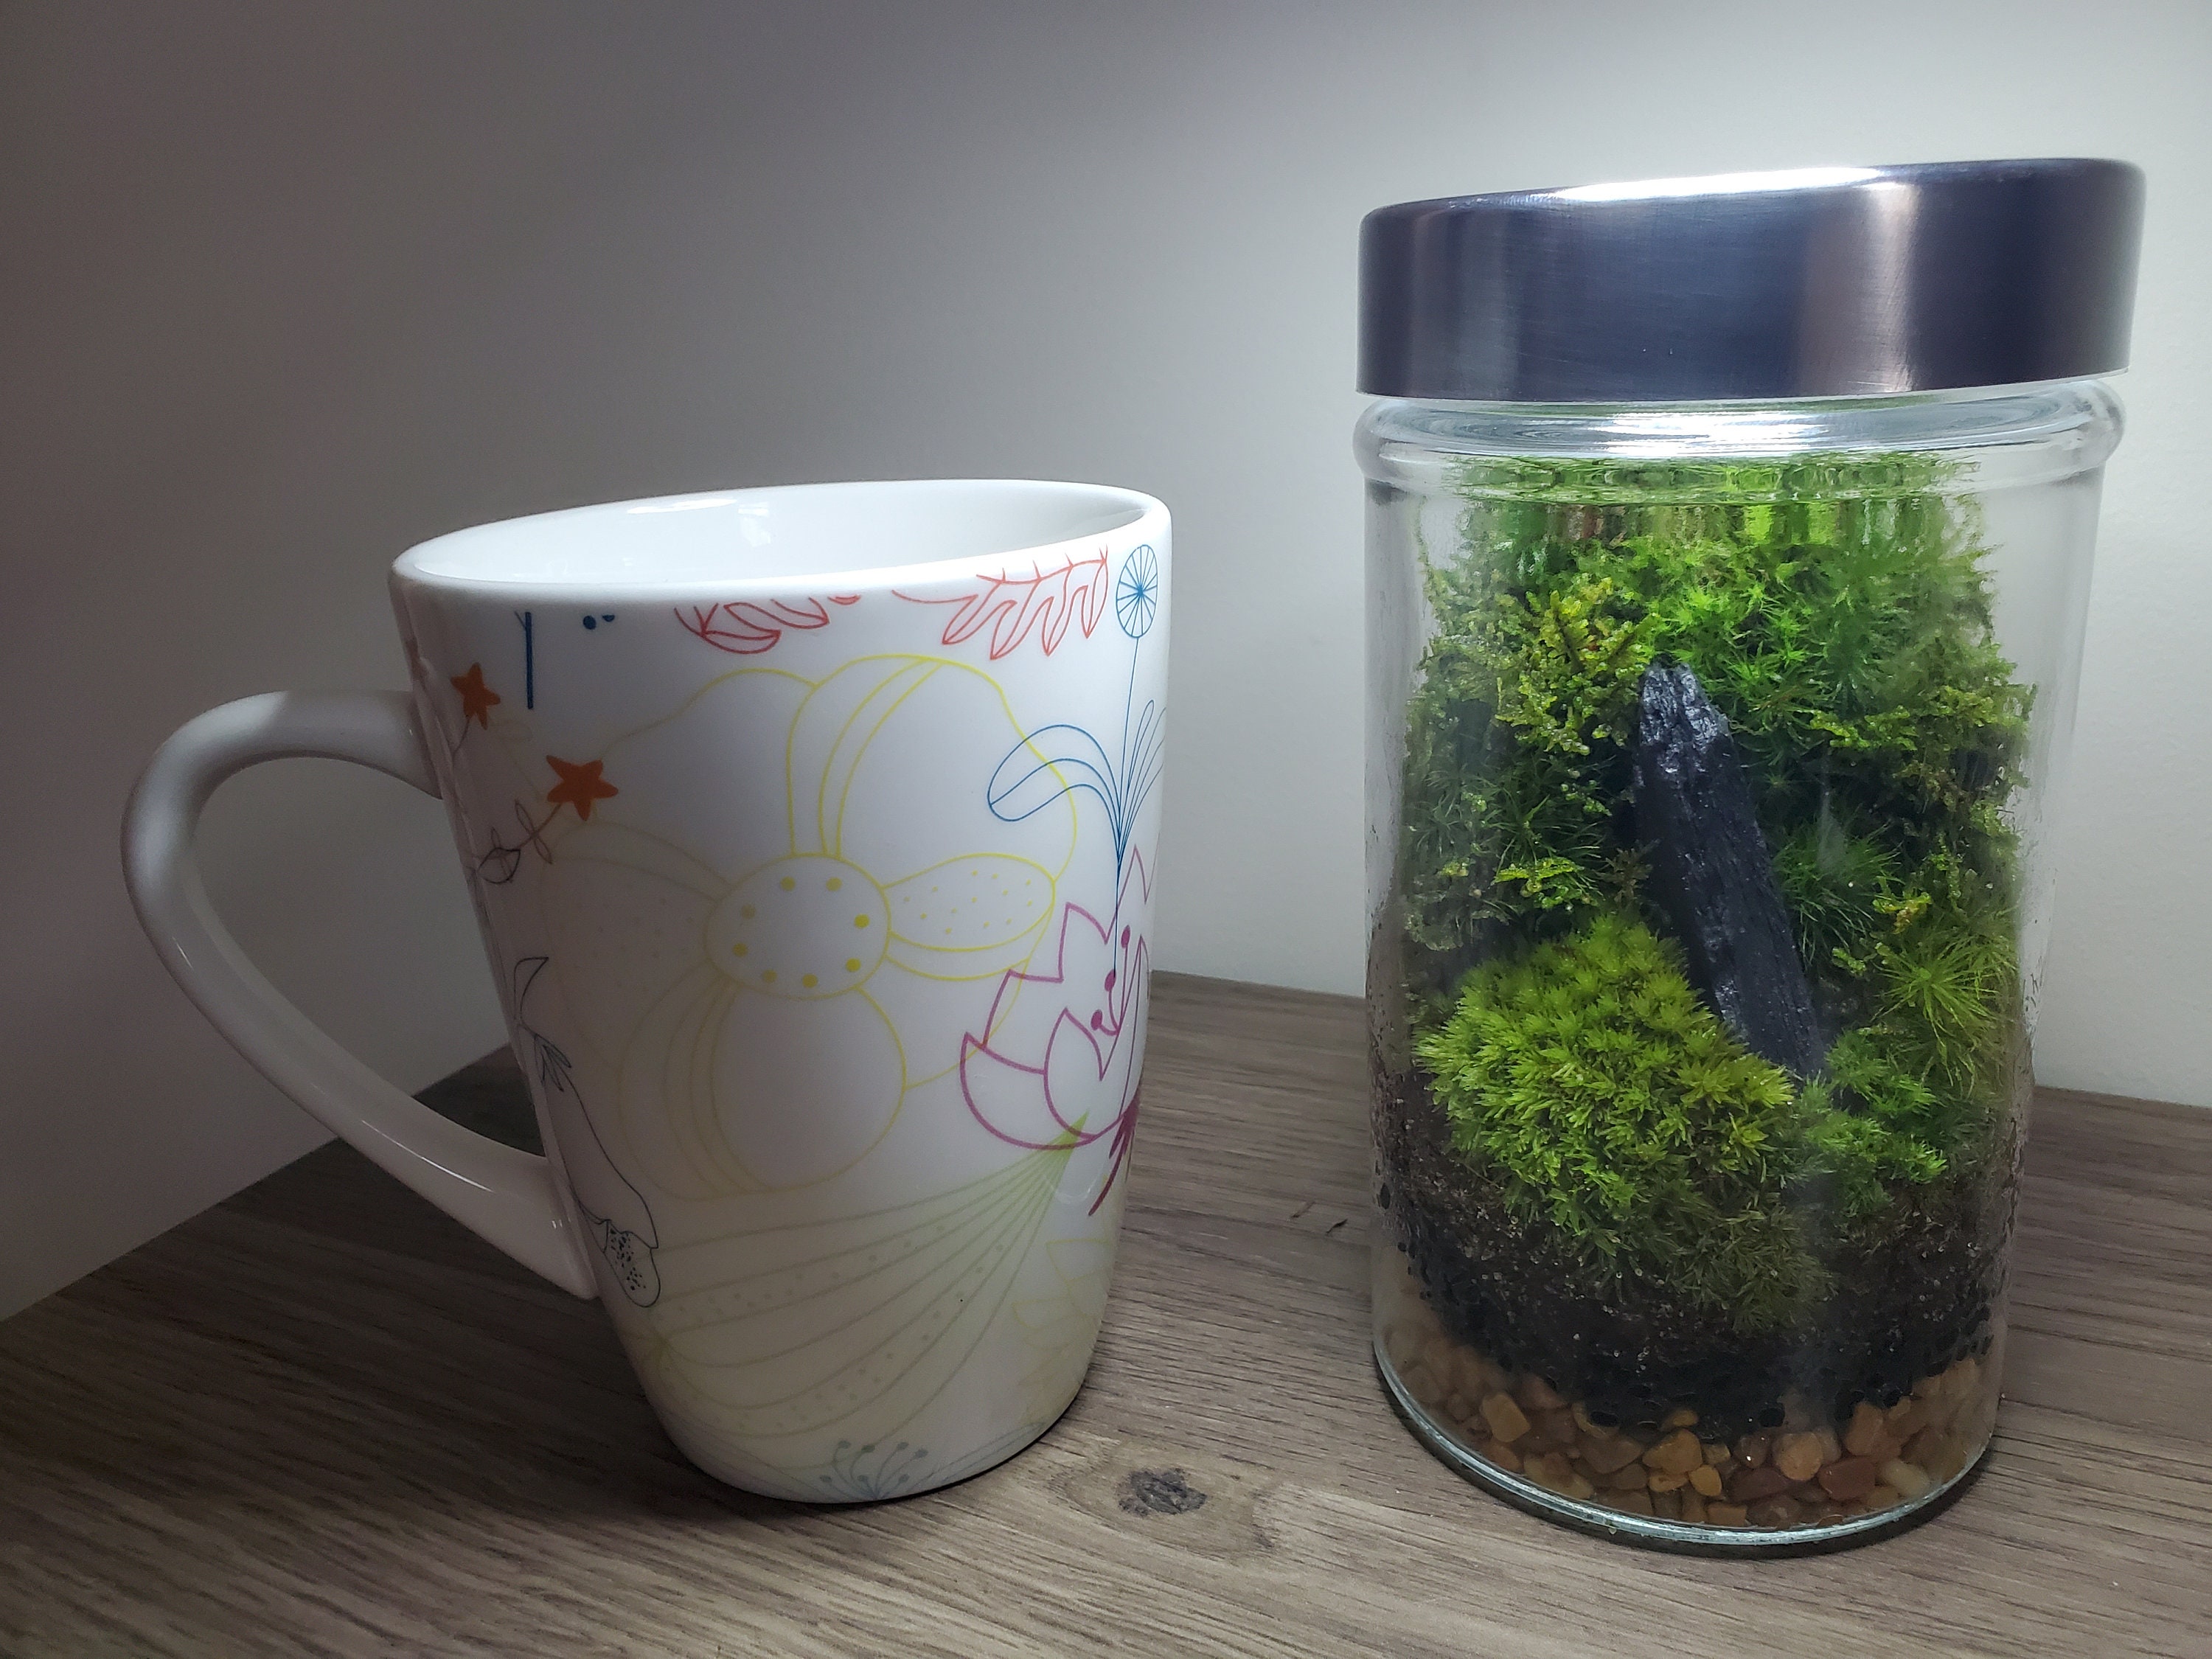 ♢♢ 2 Gallon Glass Jar Living Terrarium - Moss Rocks Etc. ♢♢ - general for  sale - by owner - craigslist